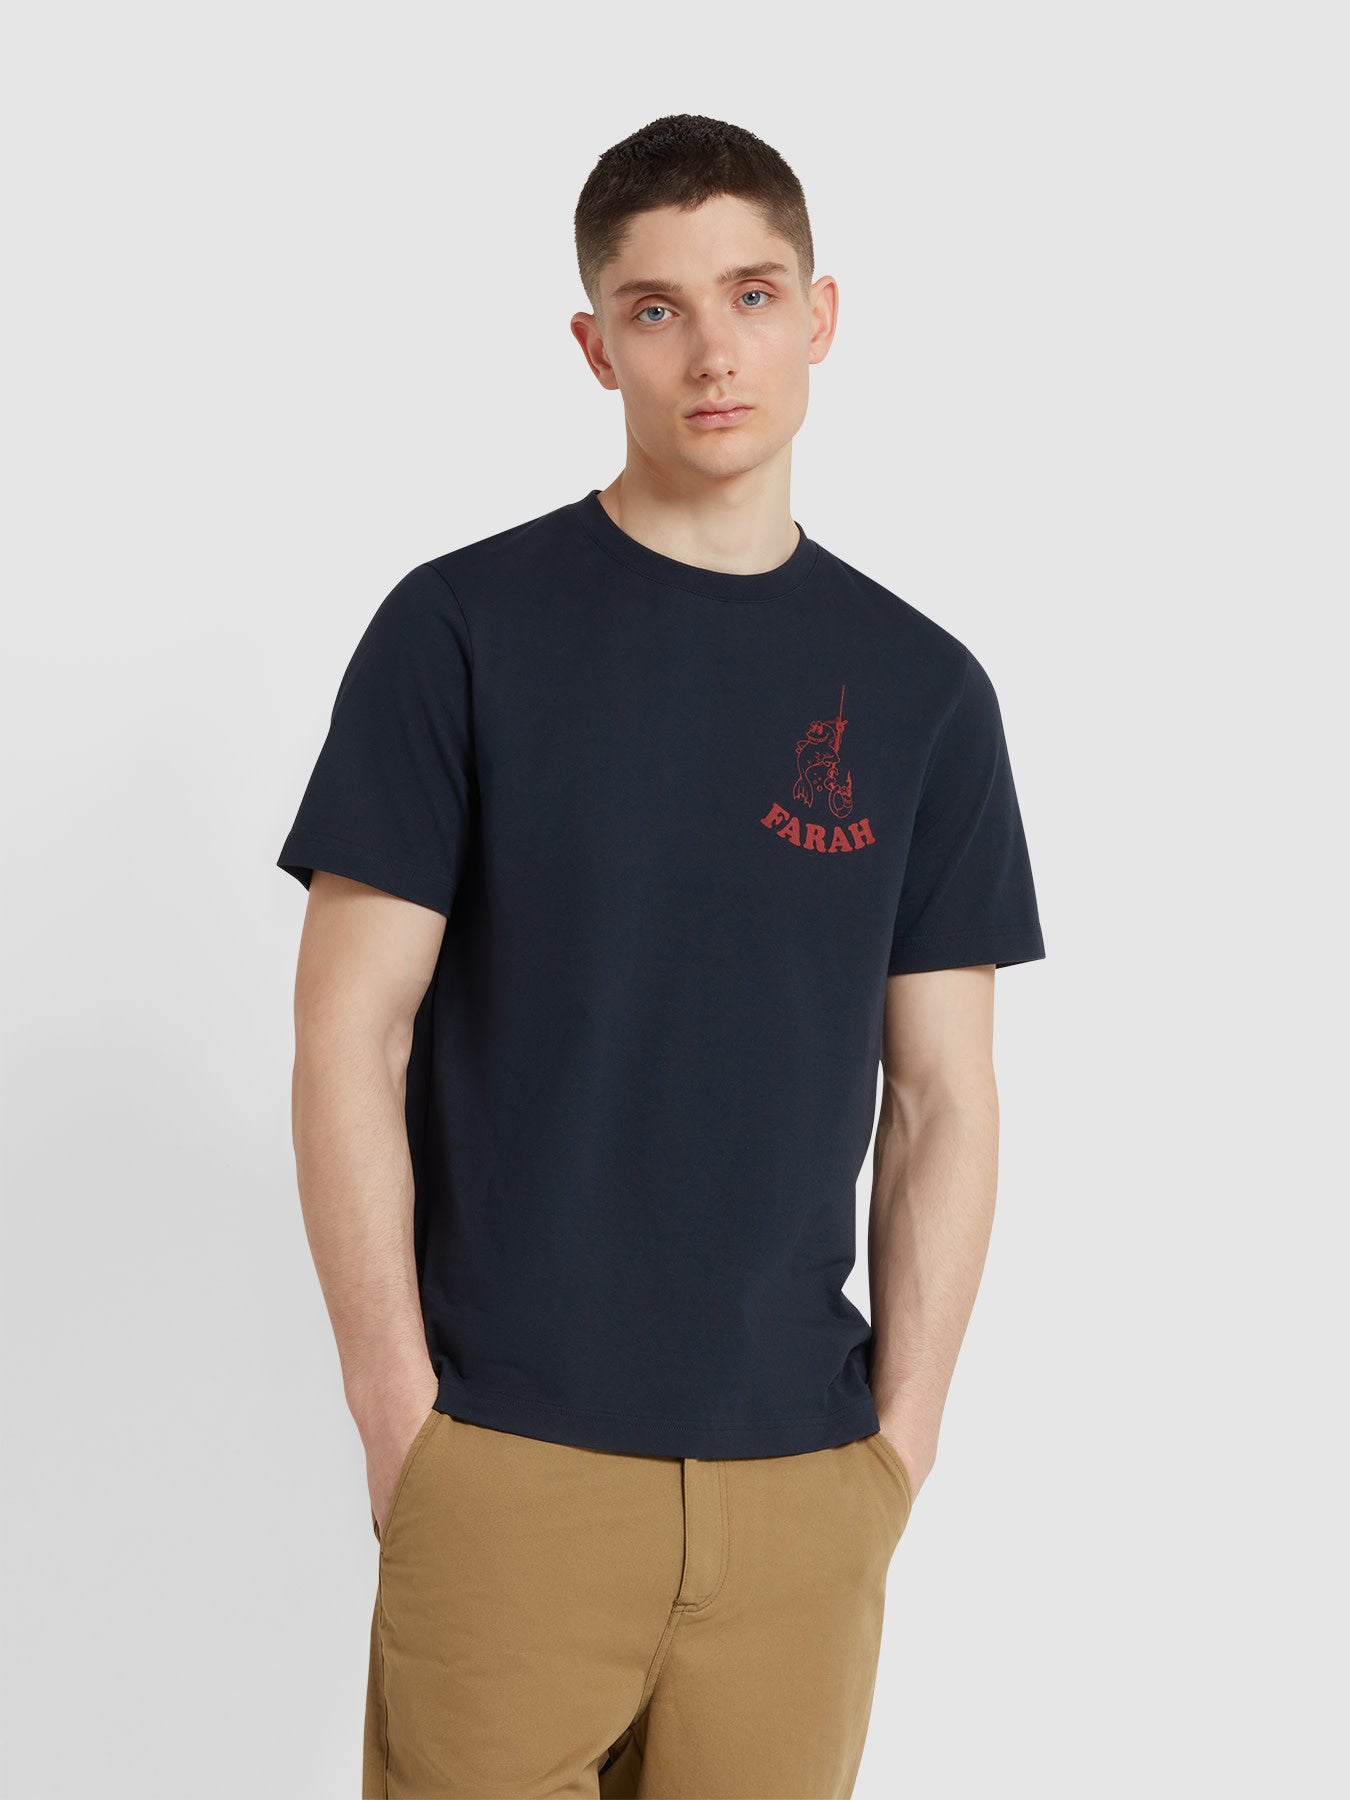 View Farah Stockwell Regular Fit Graphic TShirt In True Navy Blue Mens information